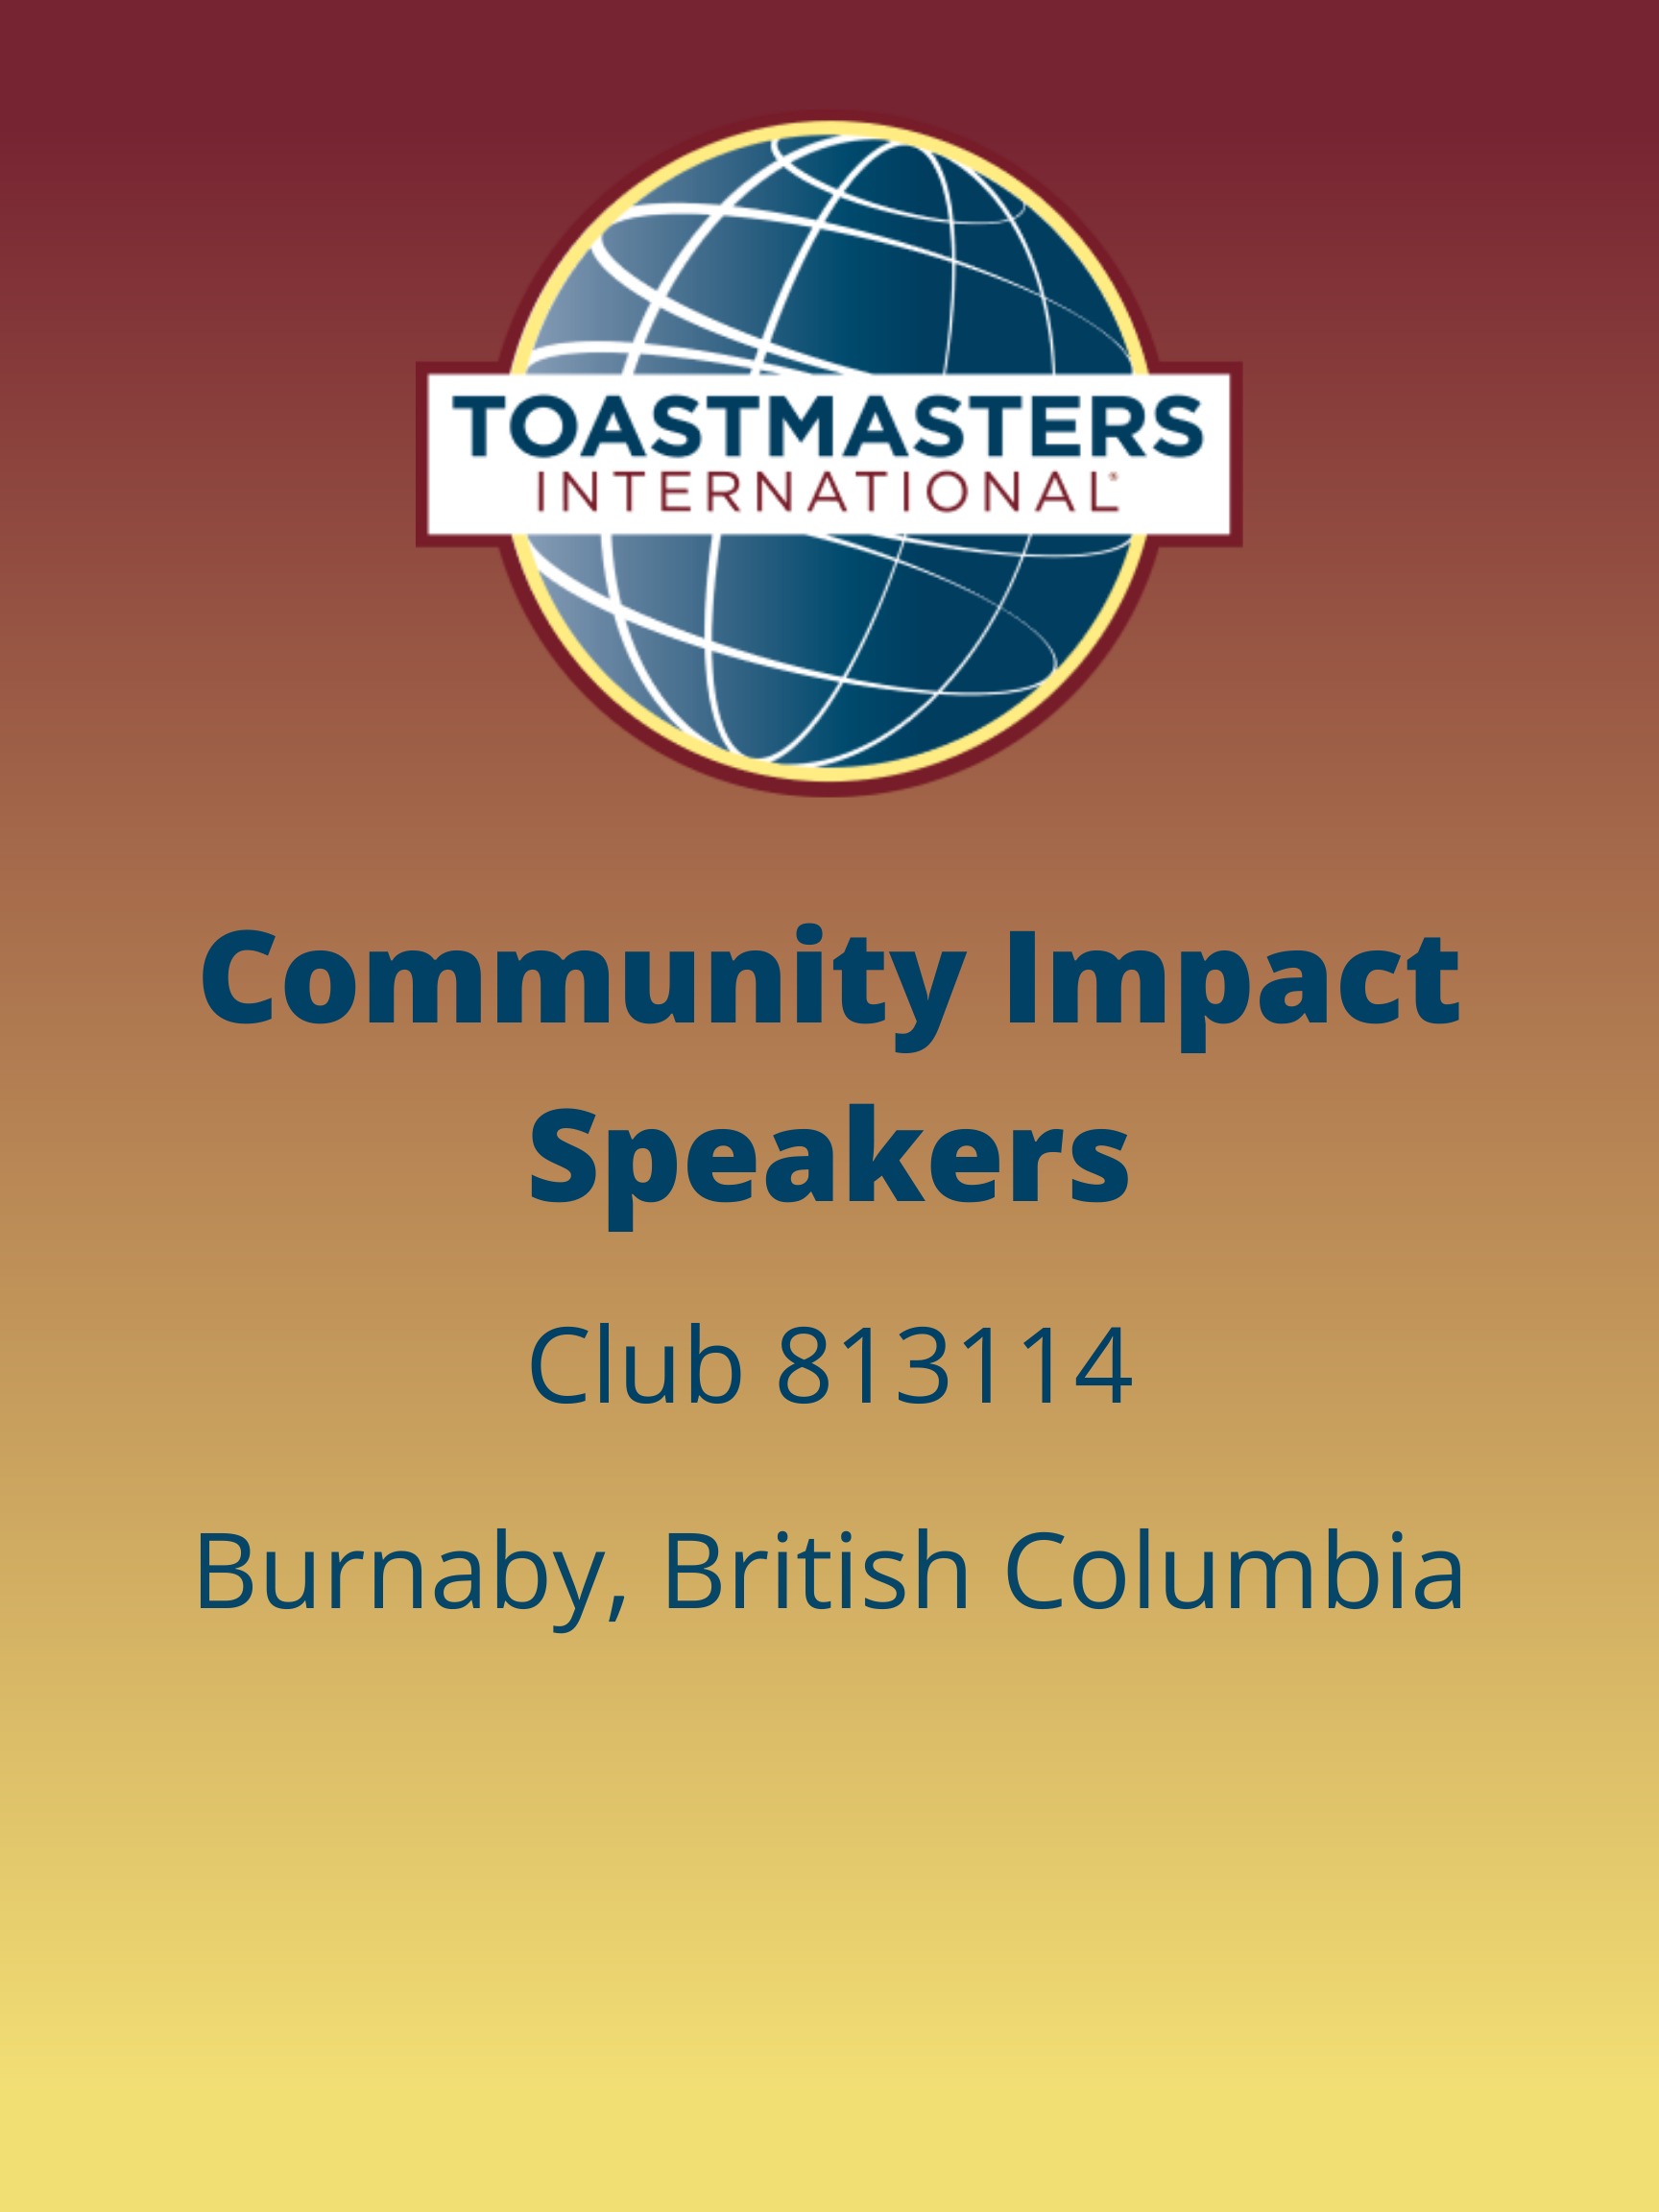 Community Impact Speakers